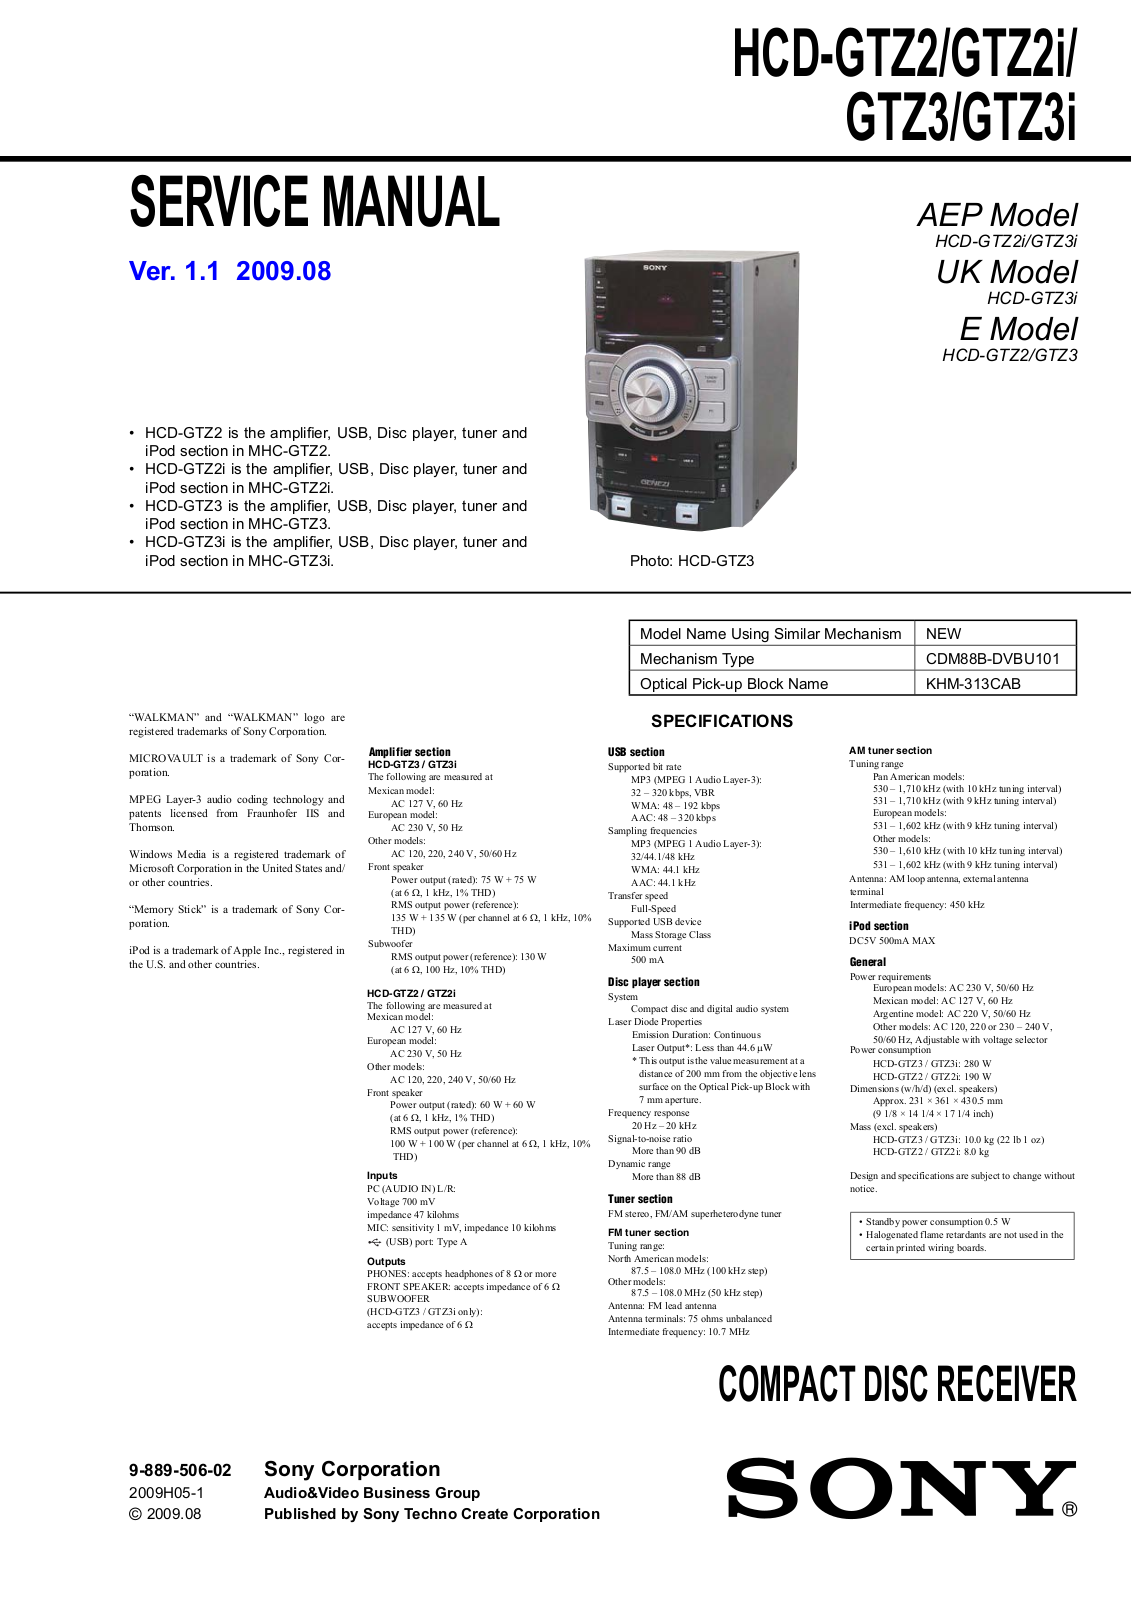 SONY HCD-GTZ2, HCD-GTZ2i, HCD-GTZ3, HCD-GTZ3i Service Manual